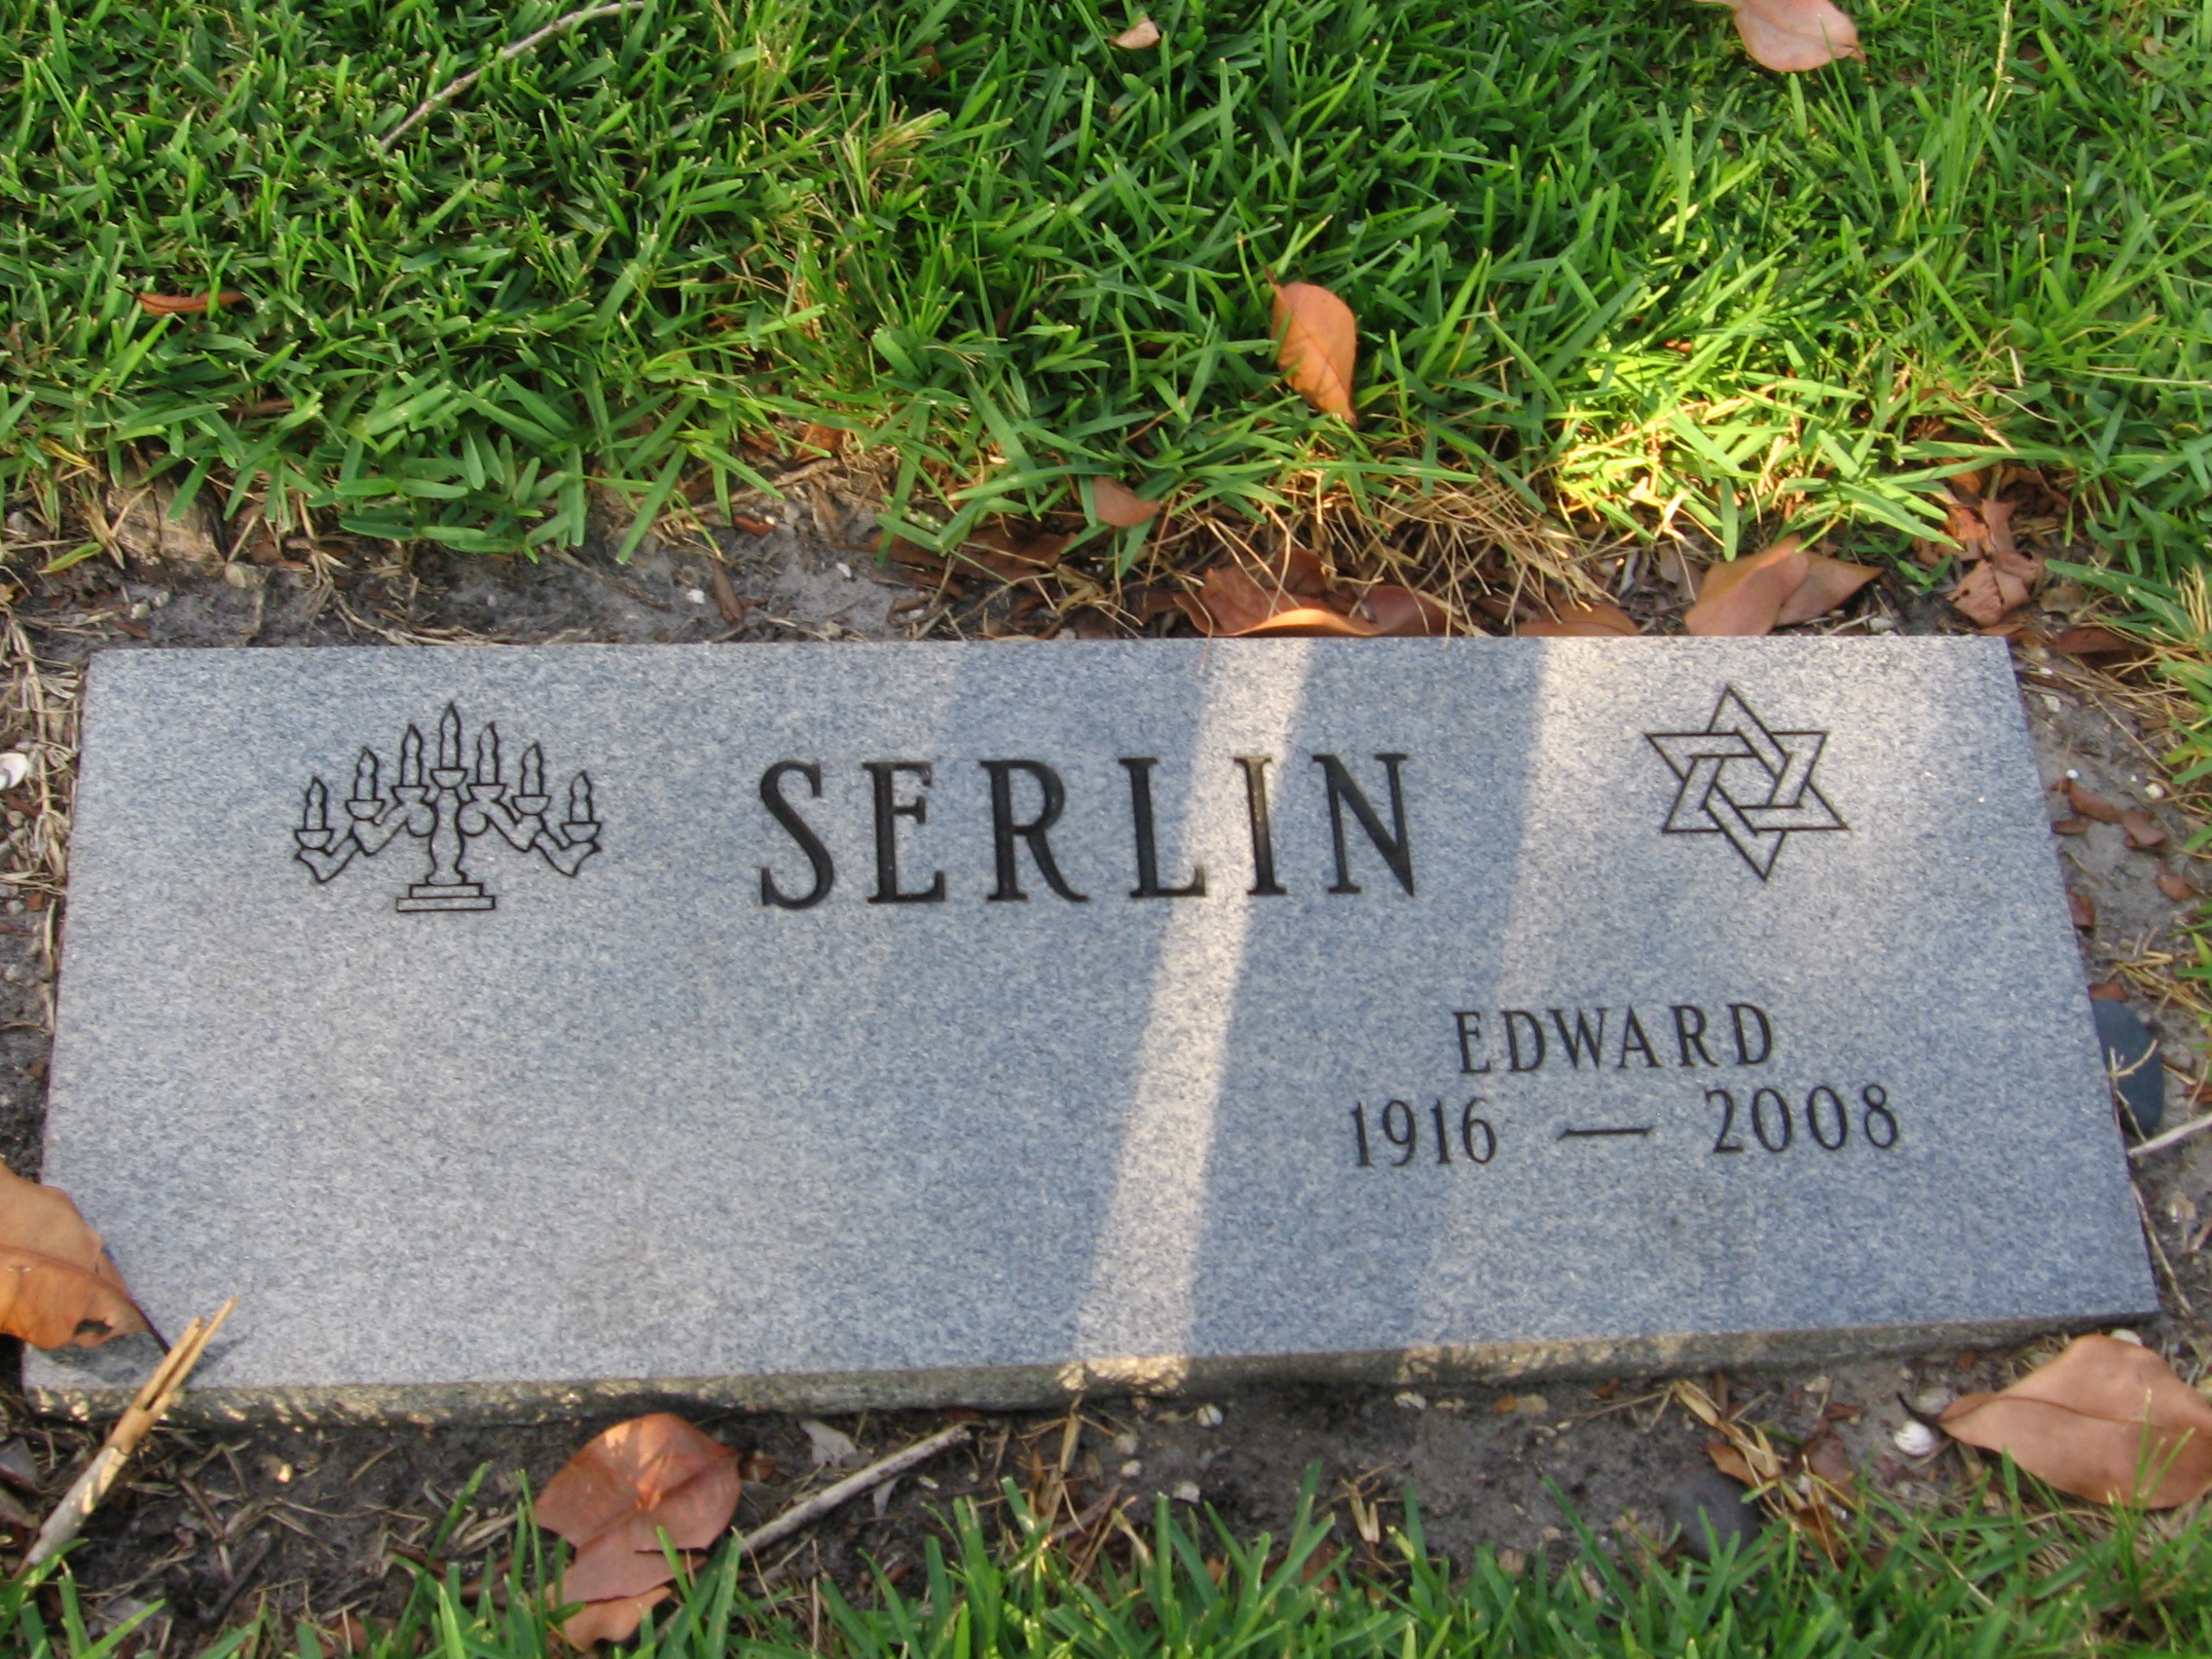 Edward Serlin